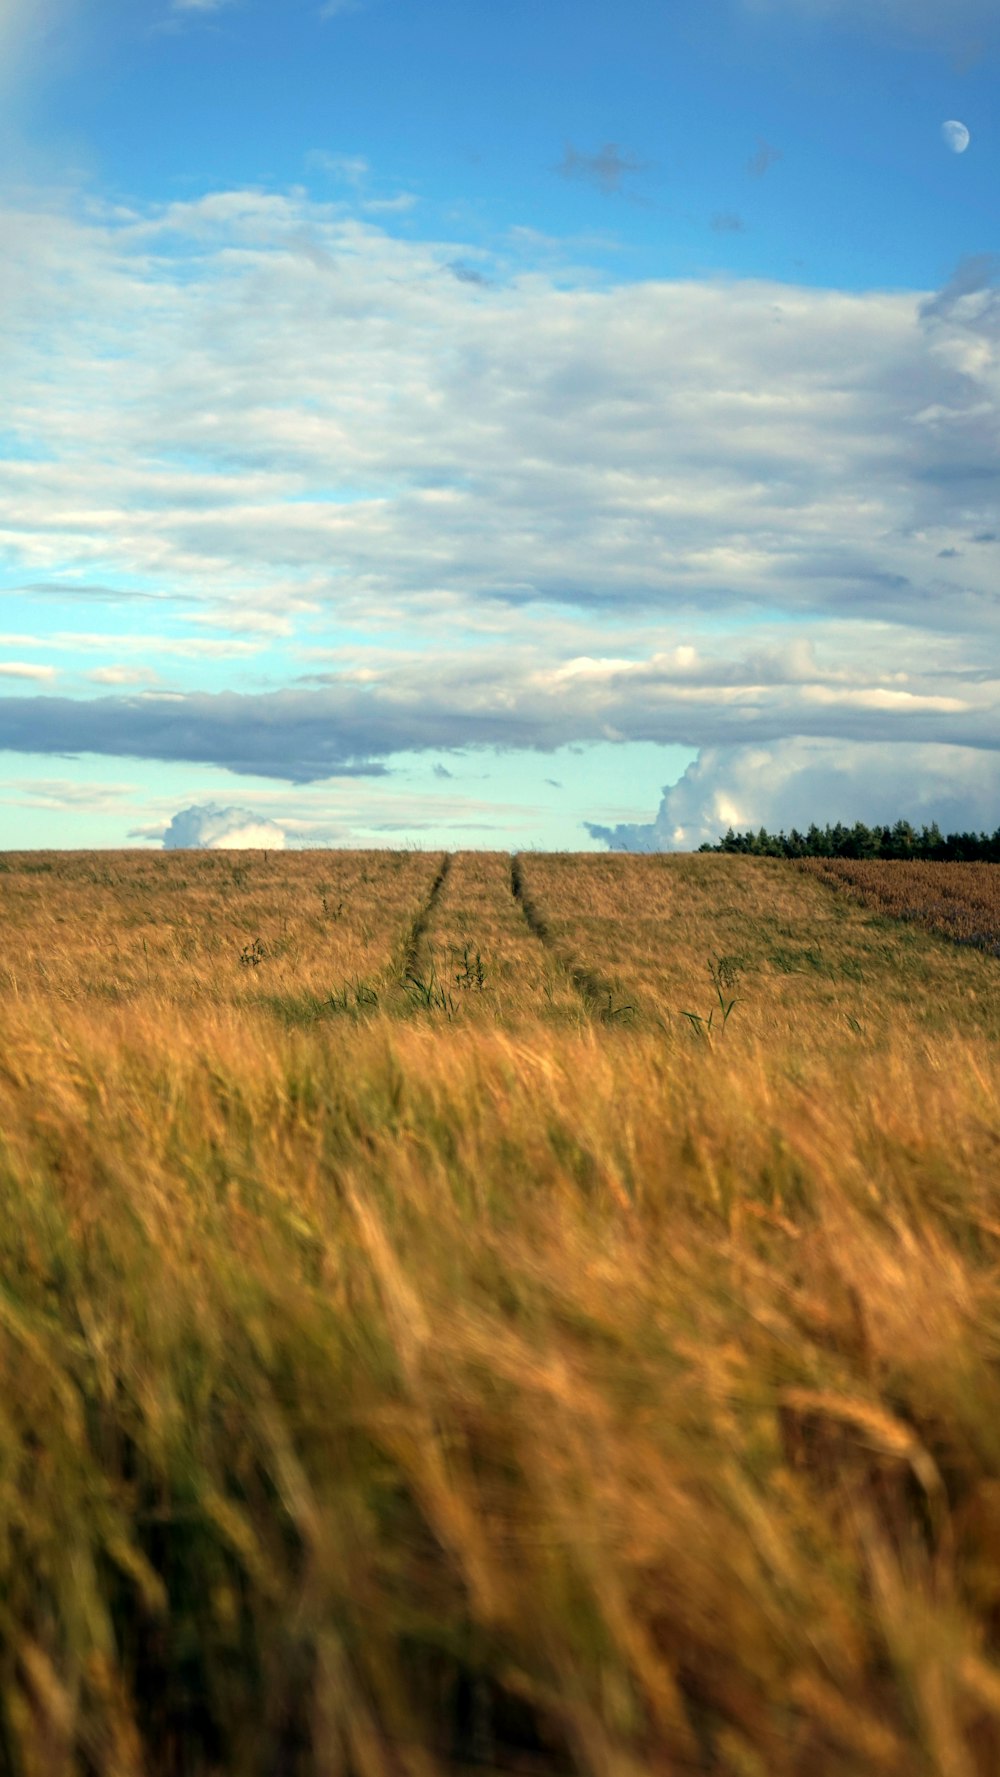 a grassy field with a blue sky